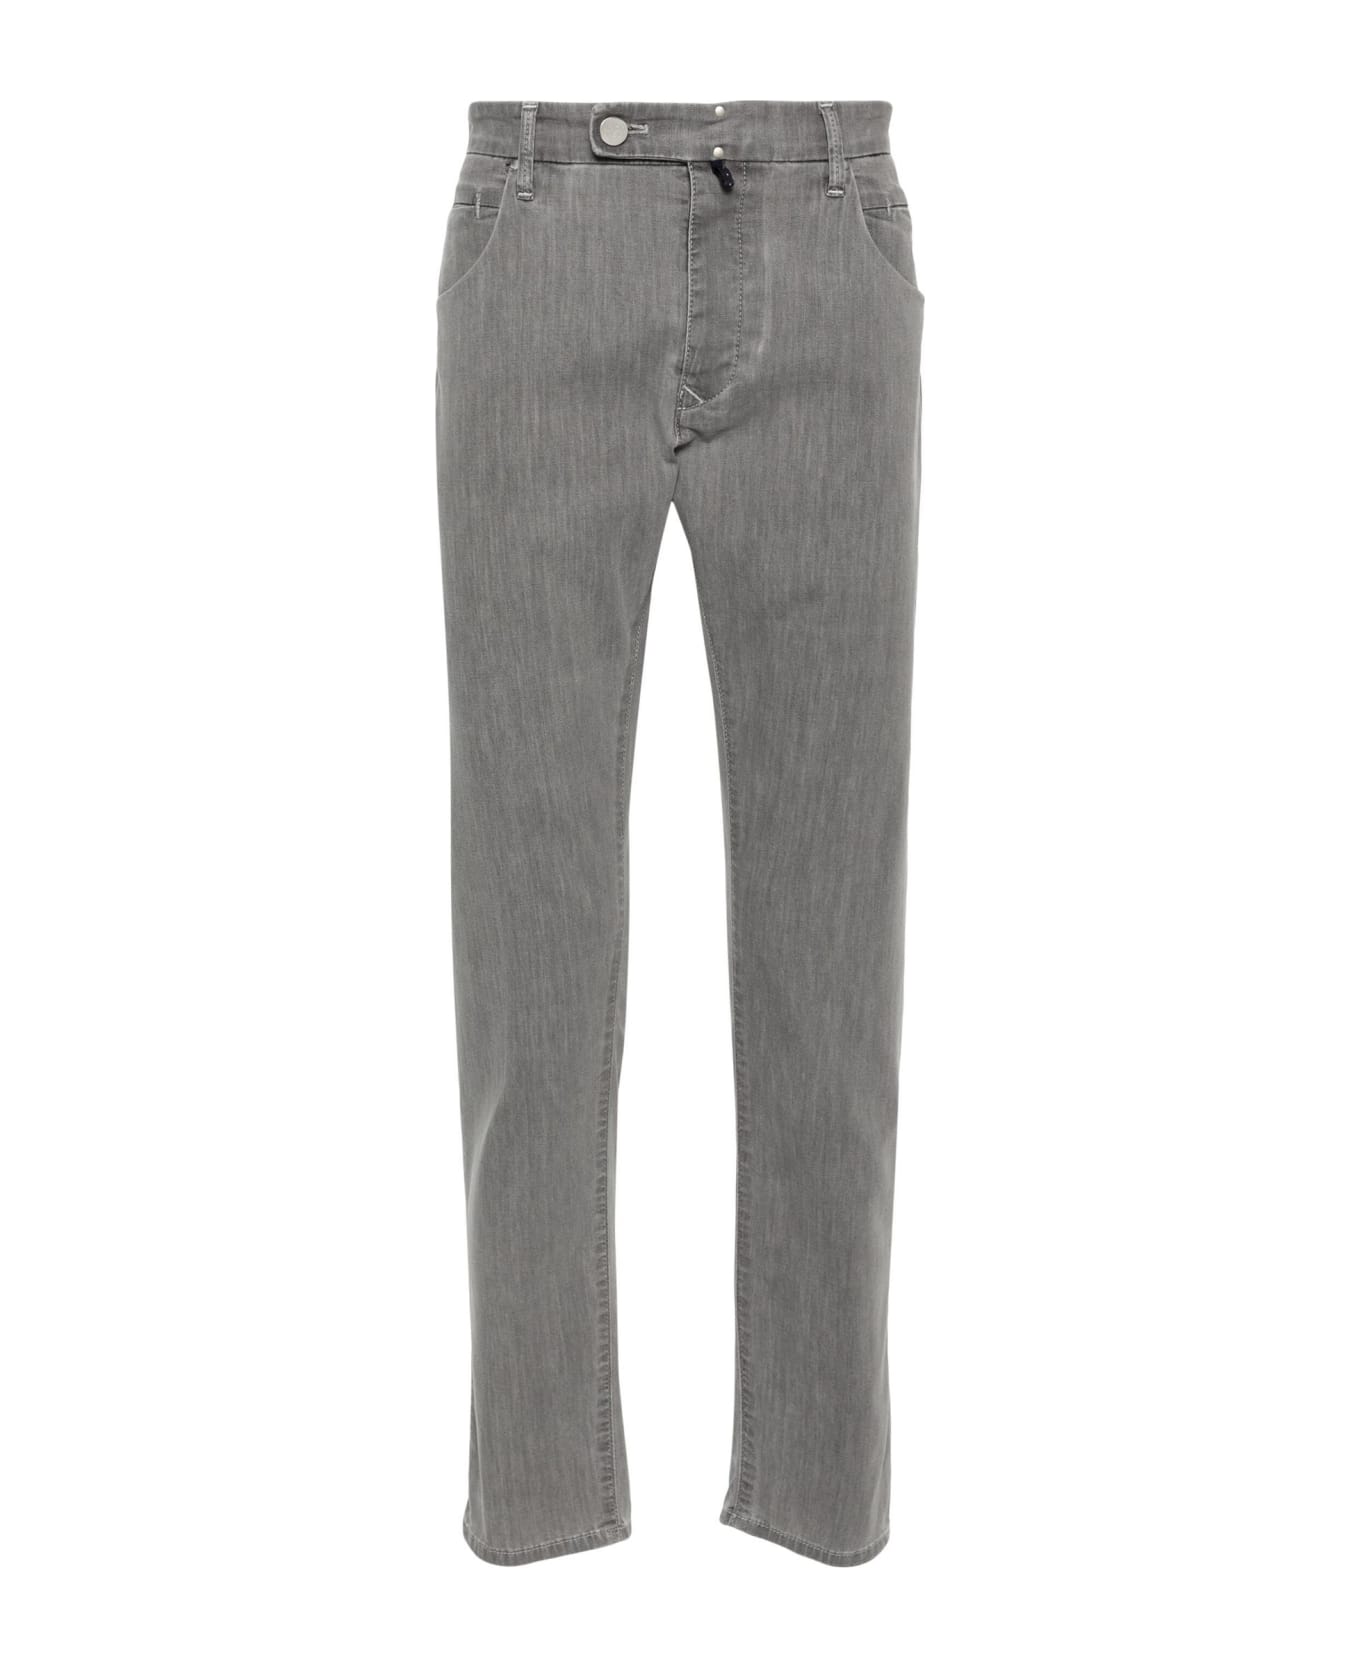 Incotex Medium Grey Cotton Blend Denim Jeans - Grey デニム